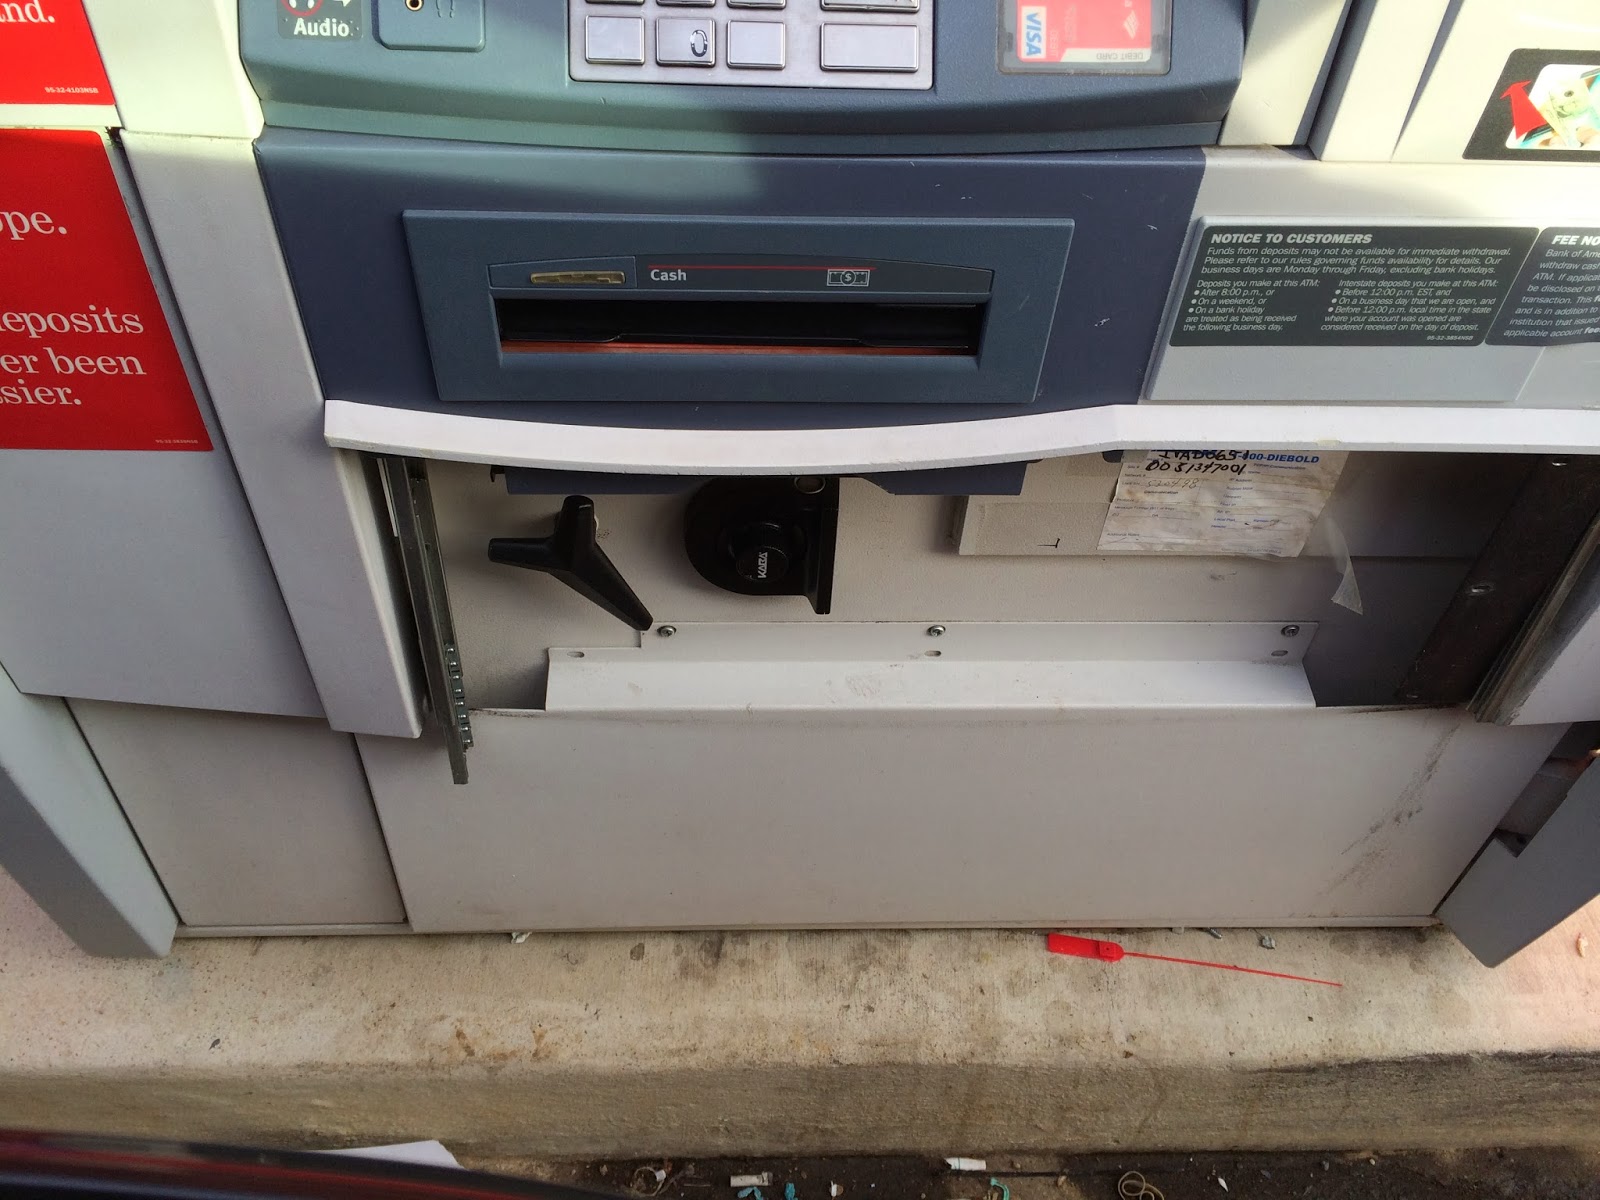 Kaba Lock on an ATM